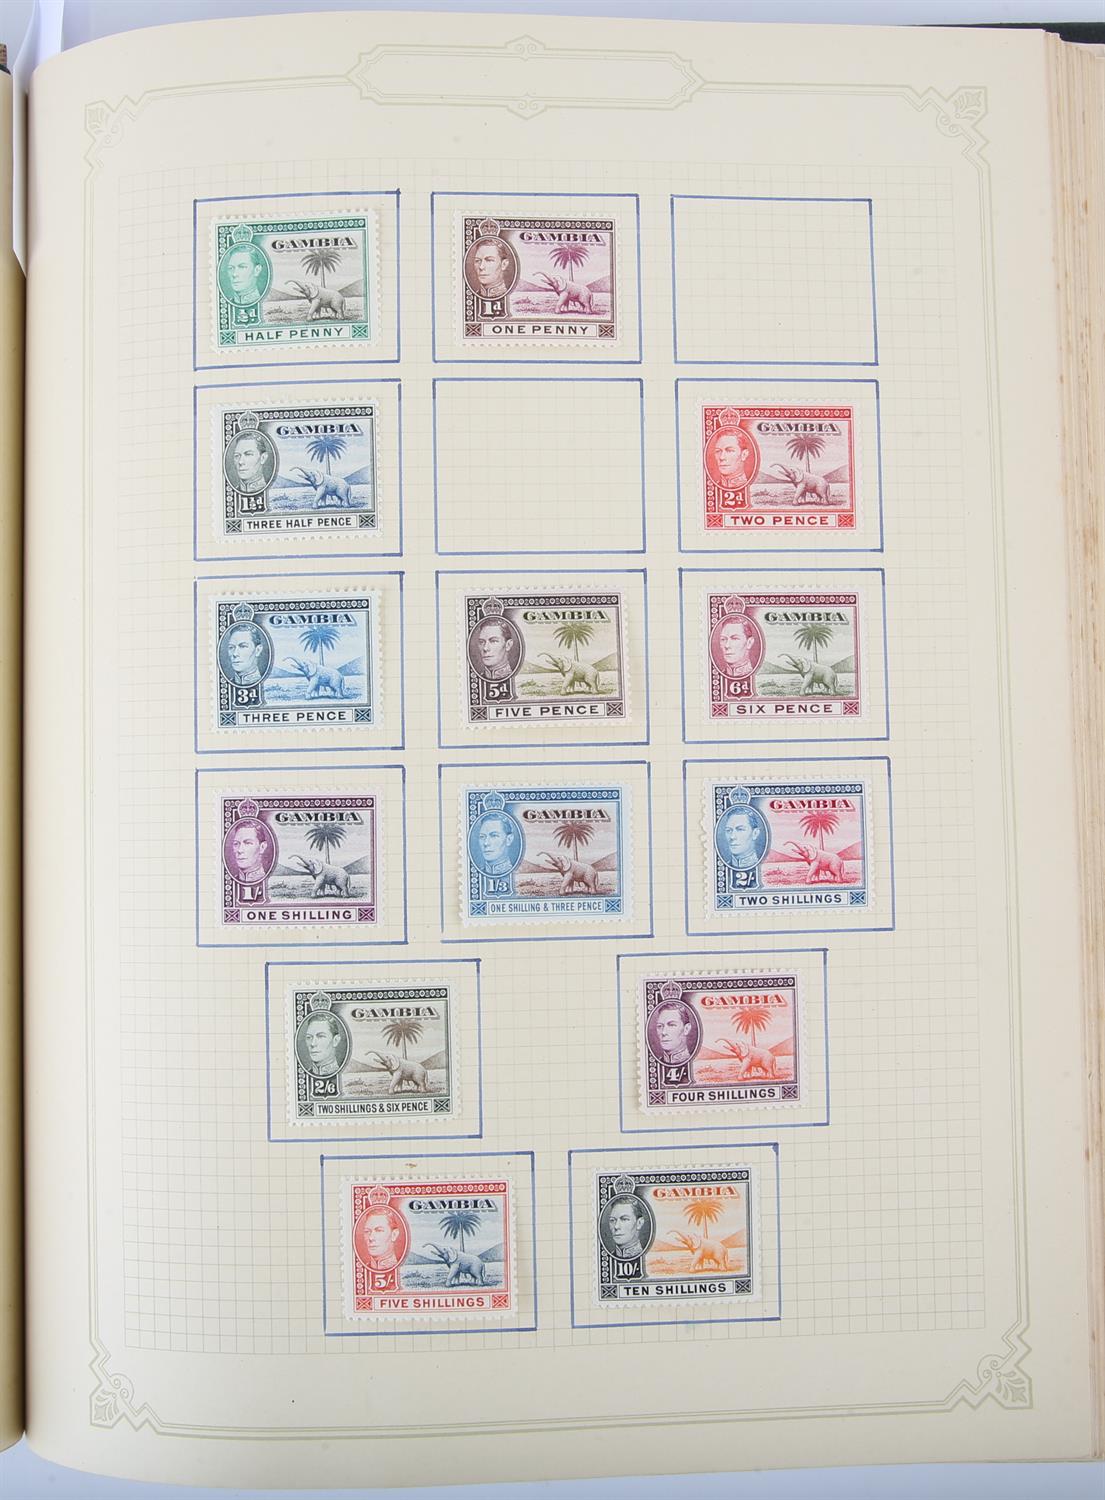 Simplex Stamp Album & Strand Stamp Album with Great Britain 1939 10 shilling, dark blue mint. - Image 2 of 5